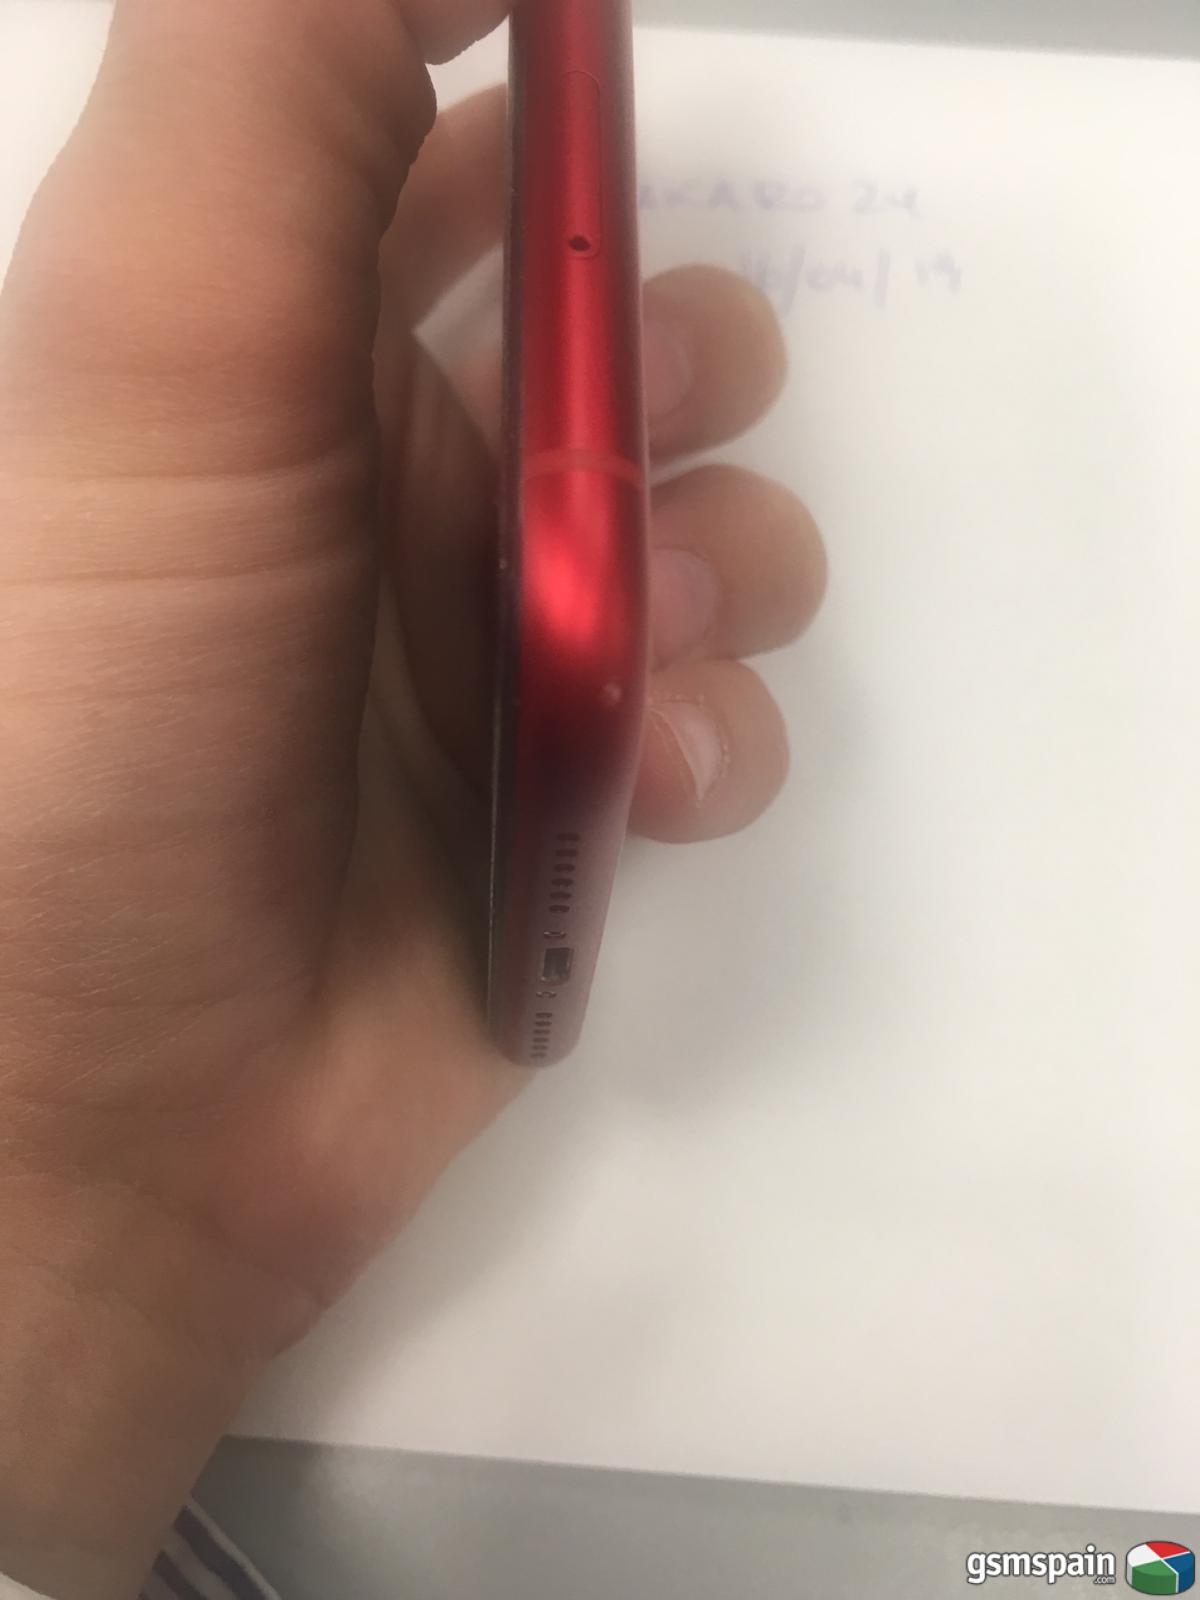 [vendo] Iphone Xr 128 Gb Rojo